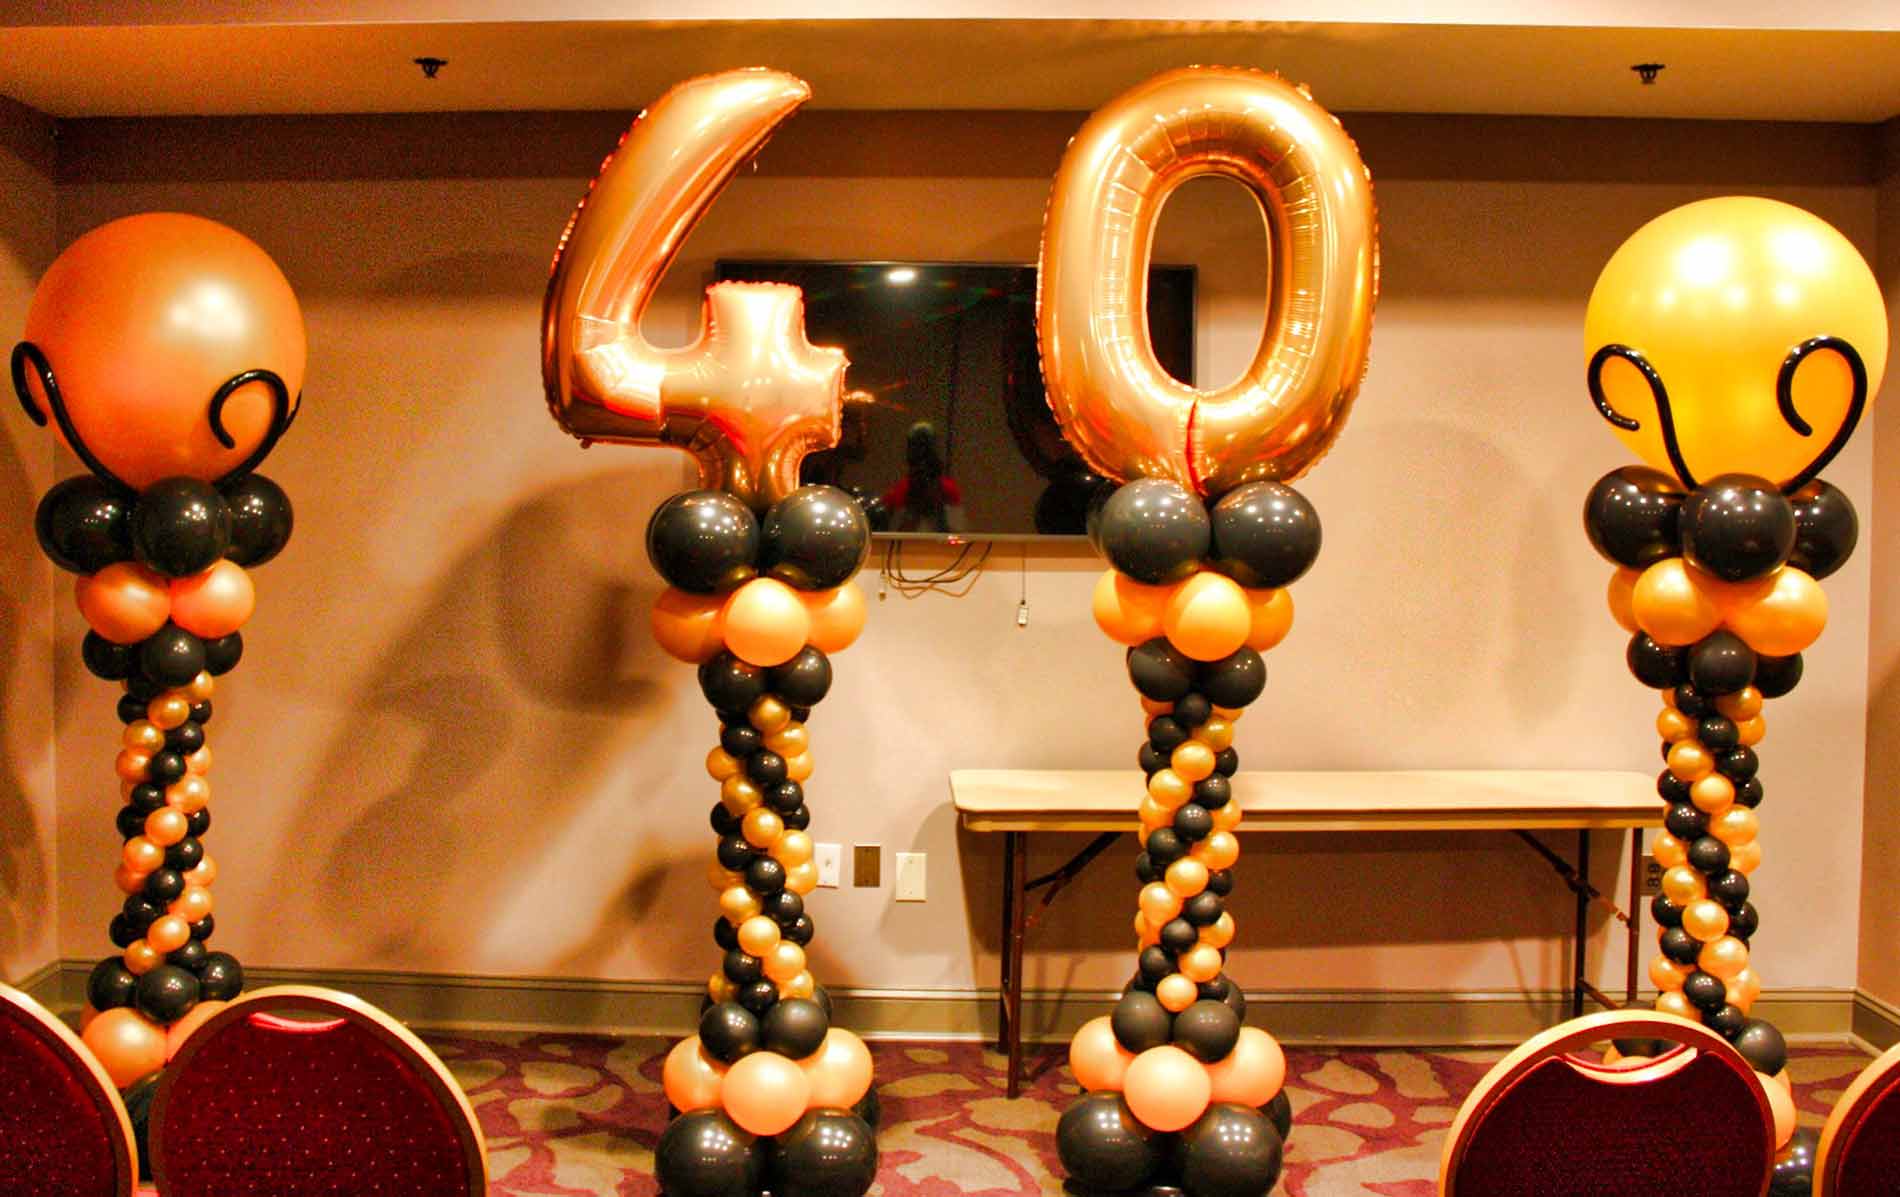 60 Balloon Column by Celebrate It™